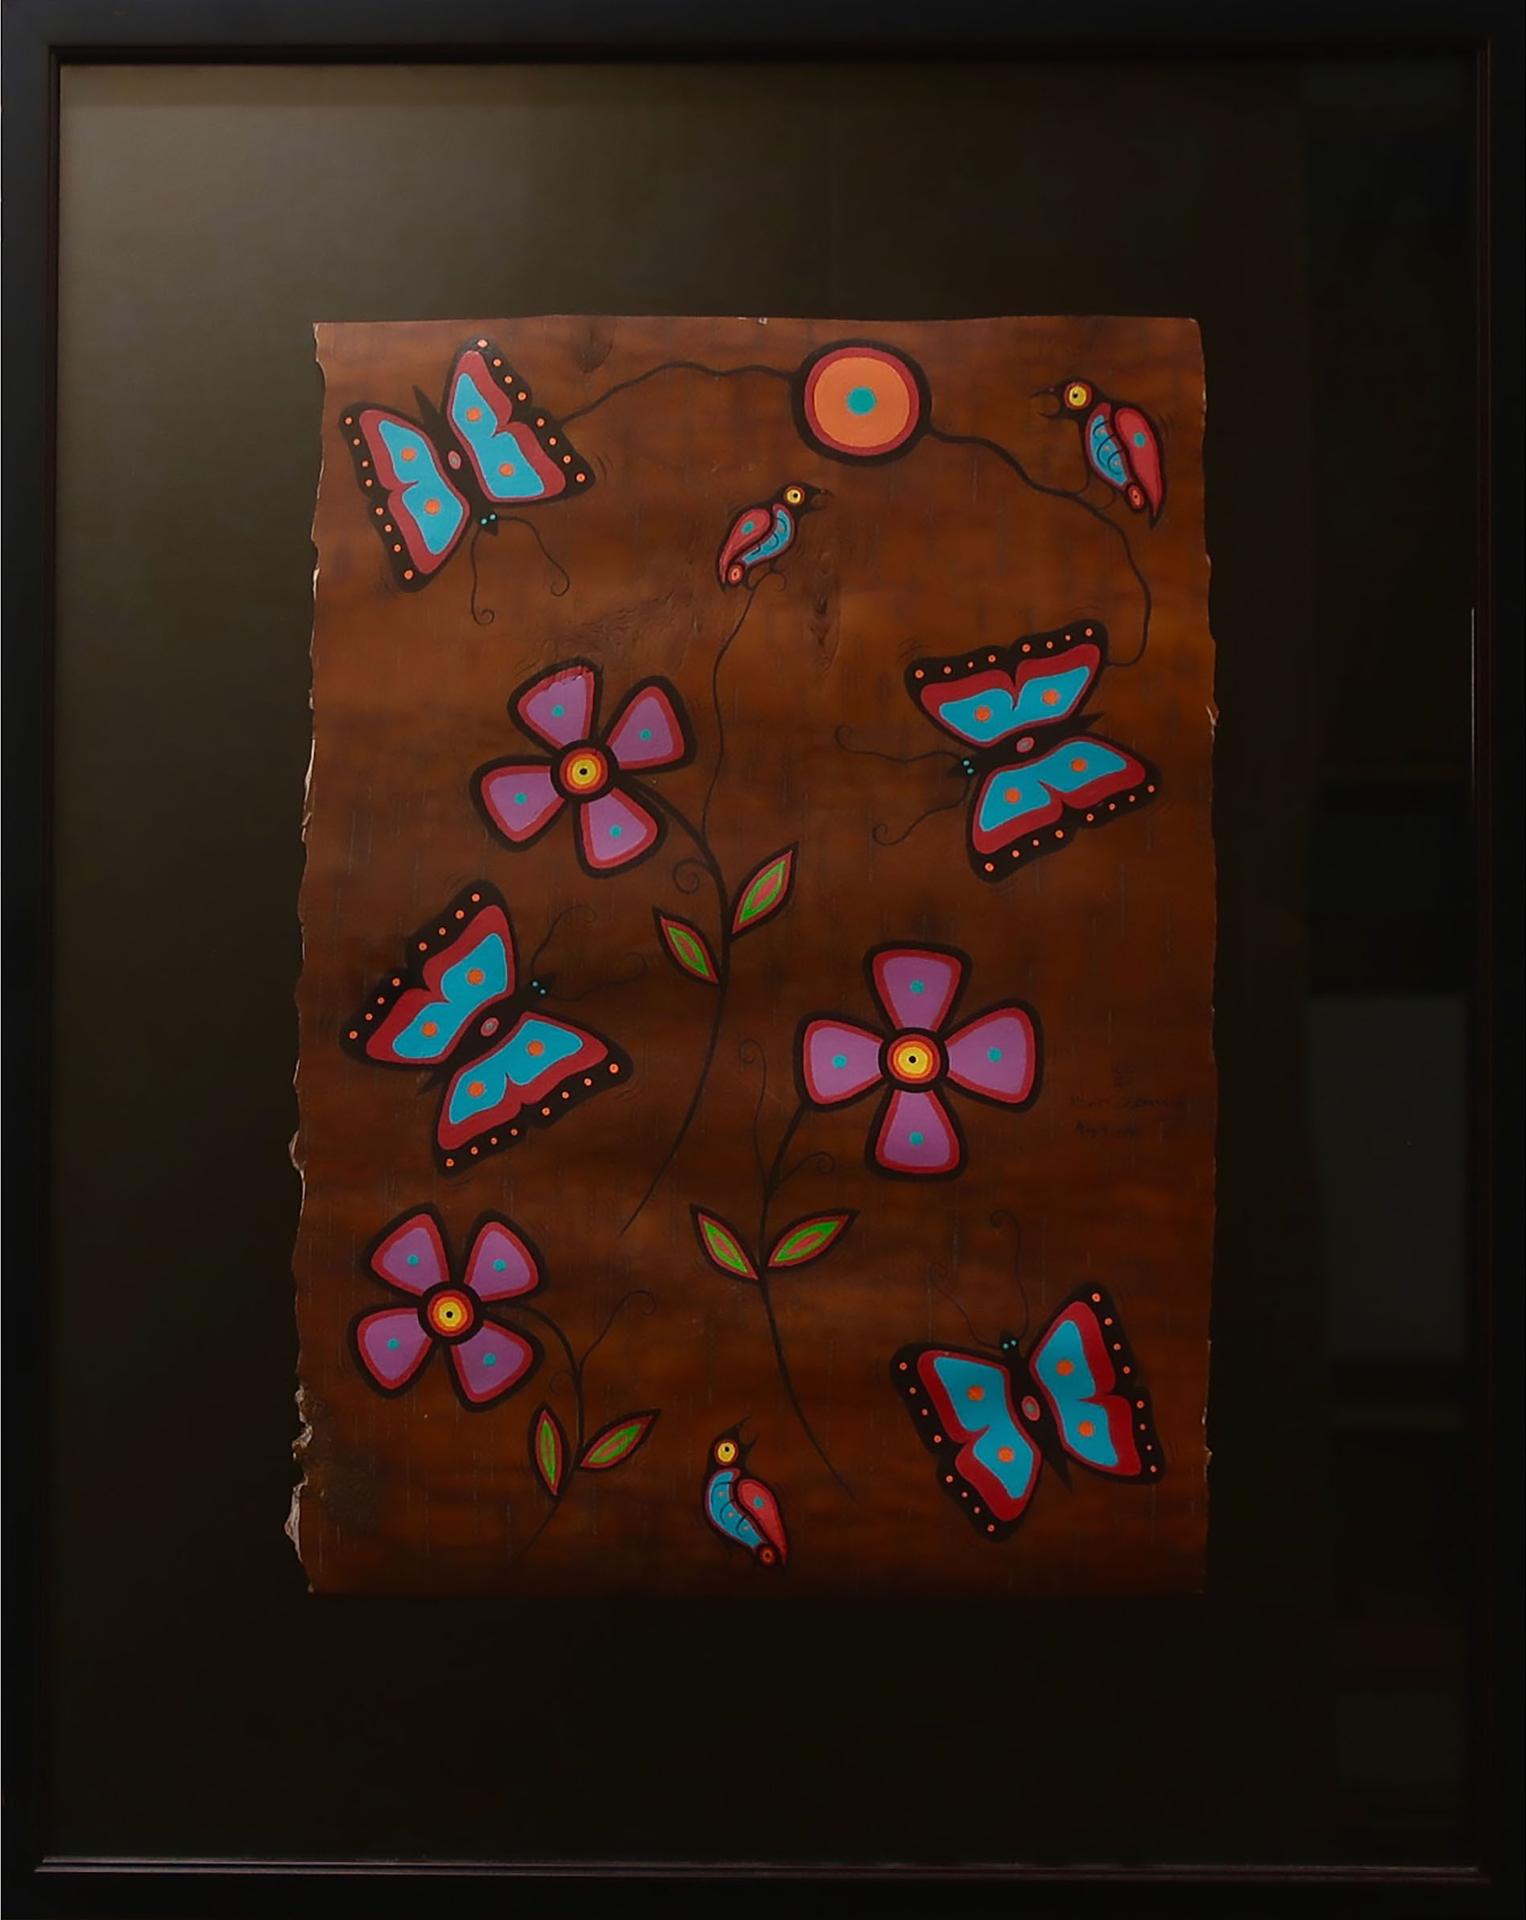 Blair Debassige (1961) - Untitled (Birds, Butterflies And Flowers)